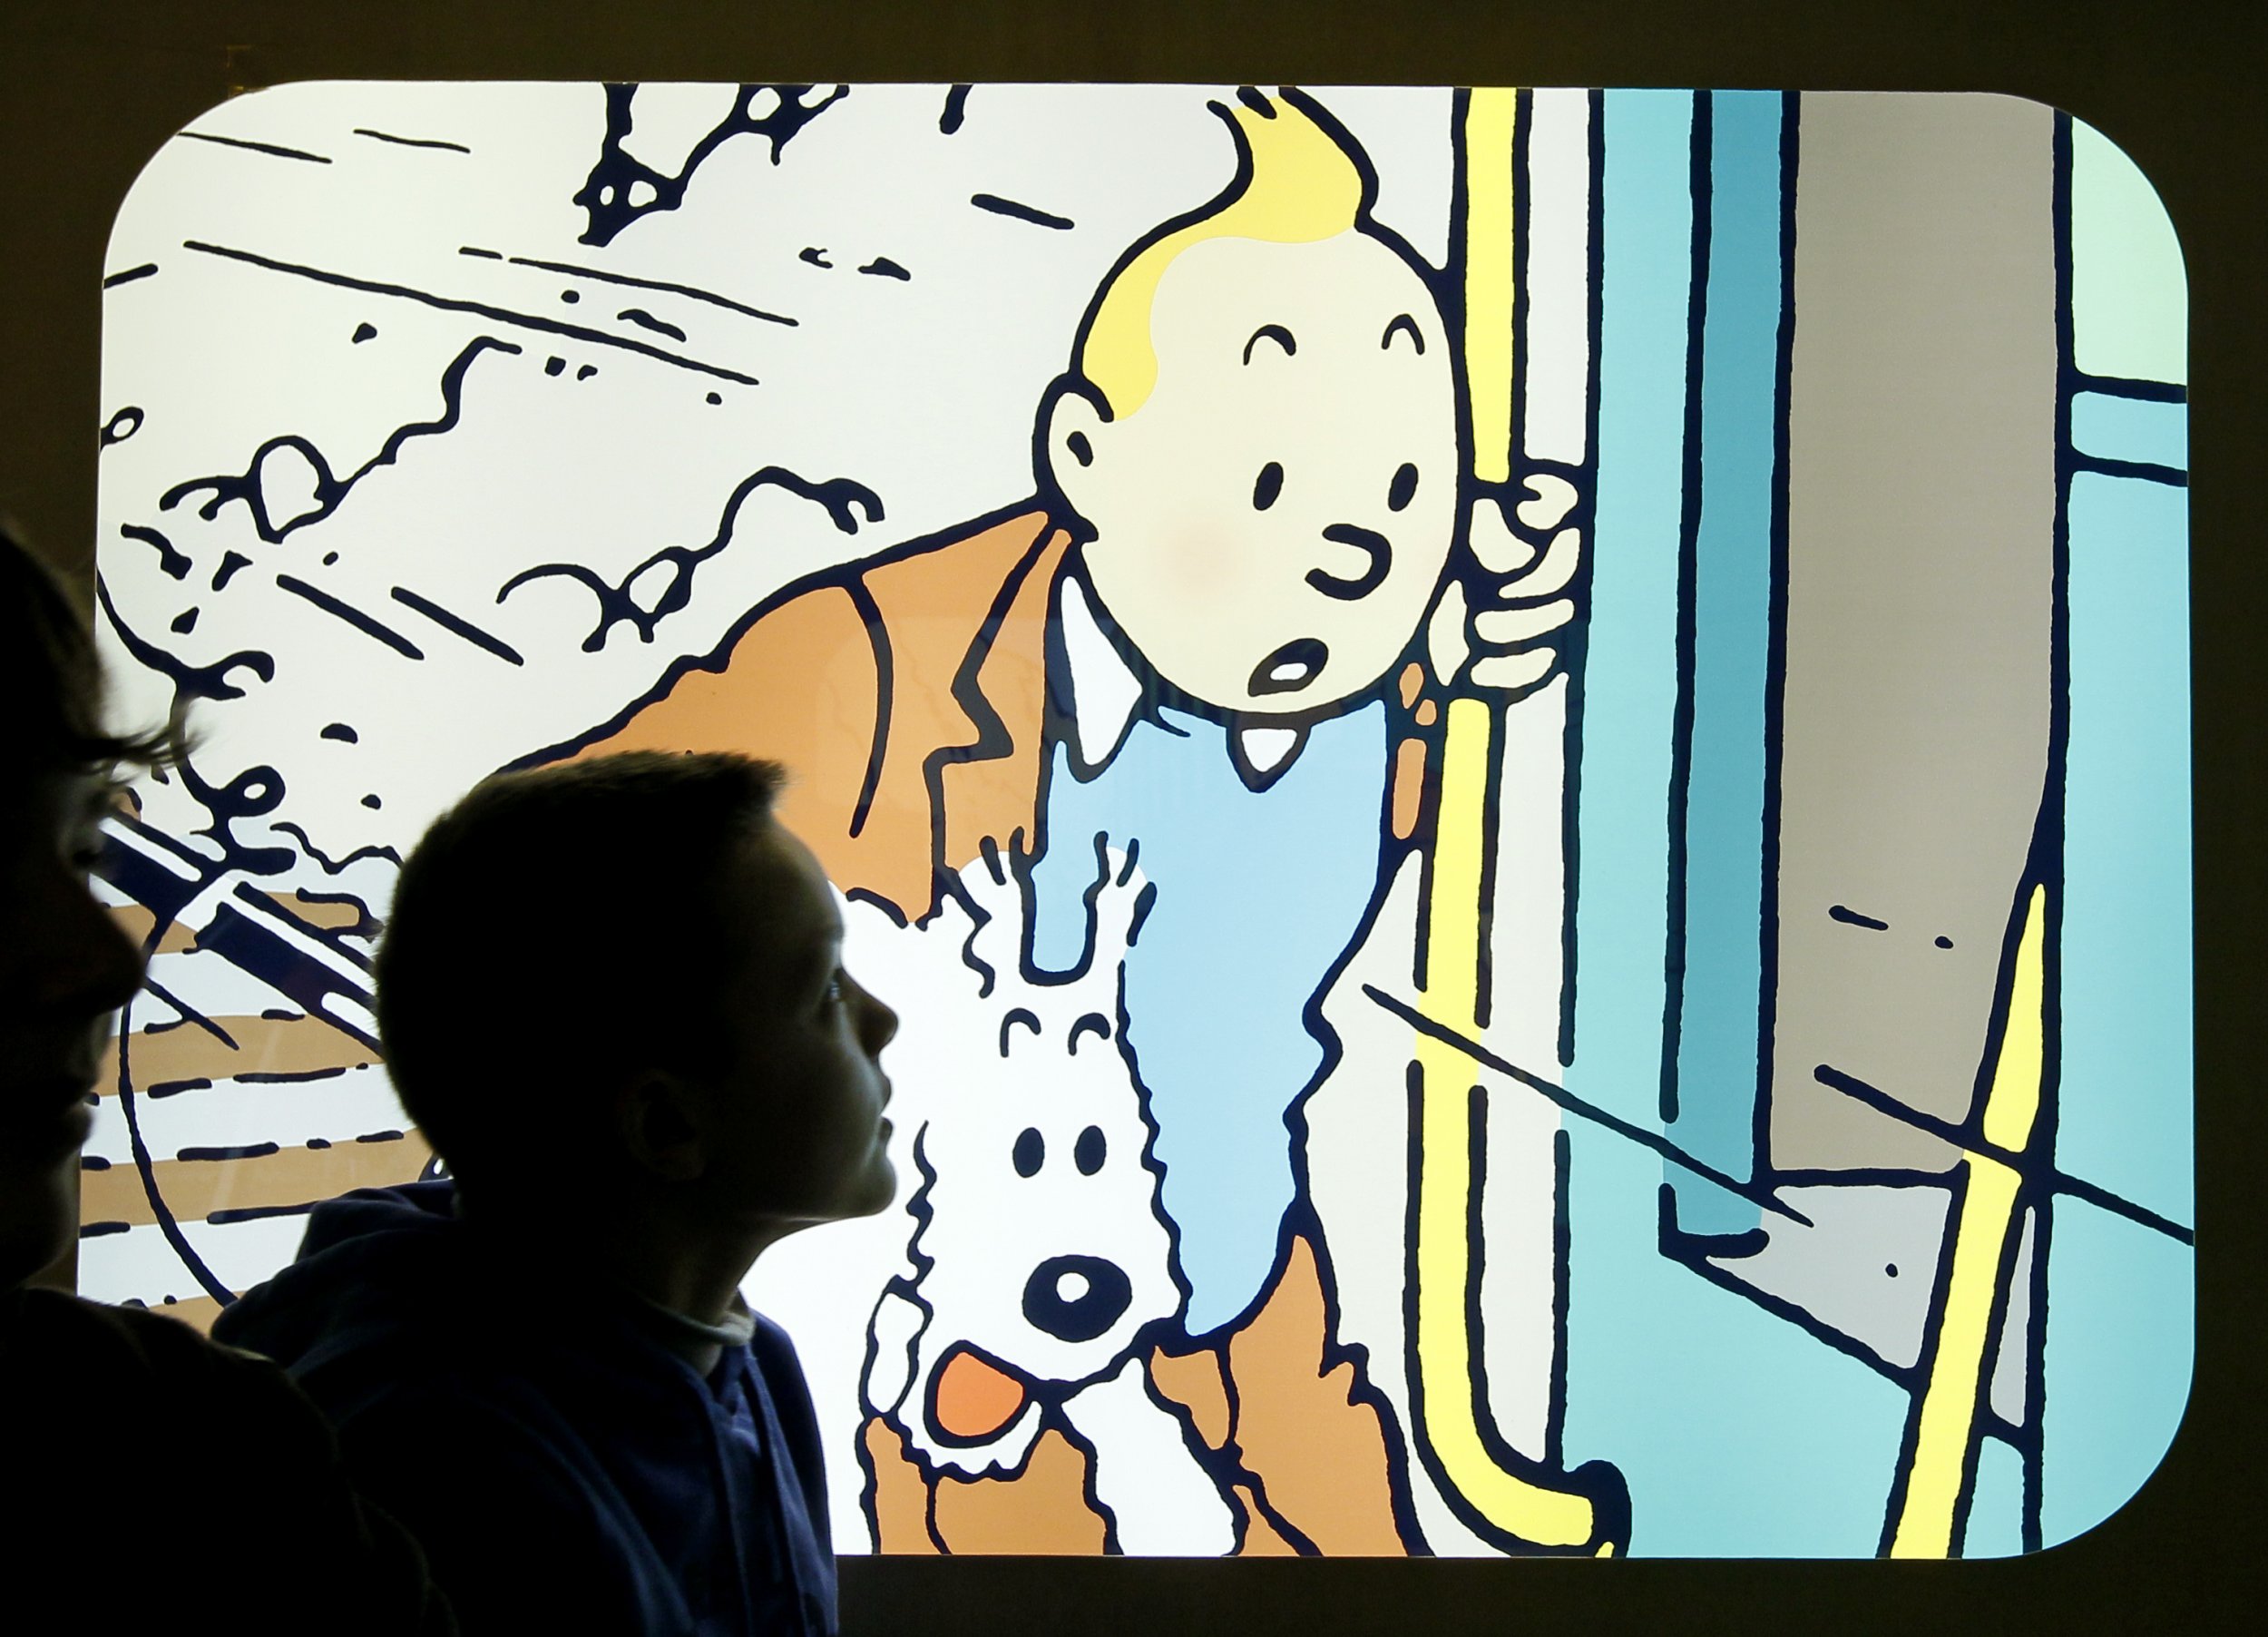 Tintin Brussels attacks